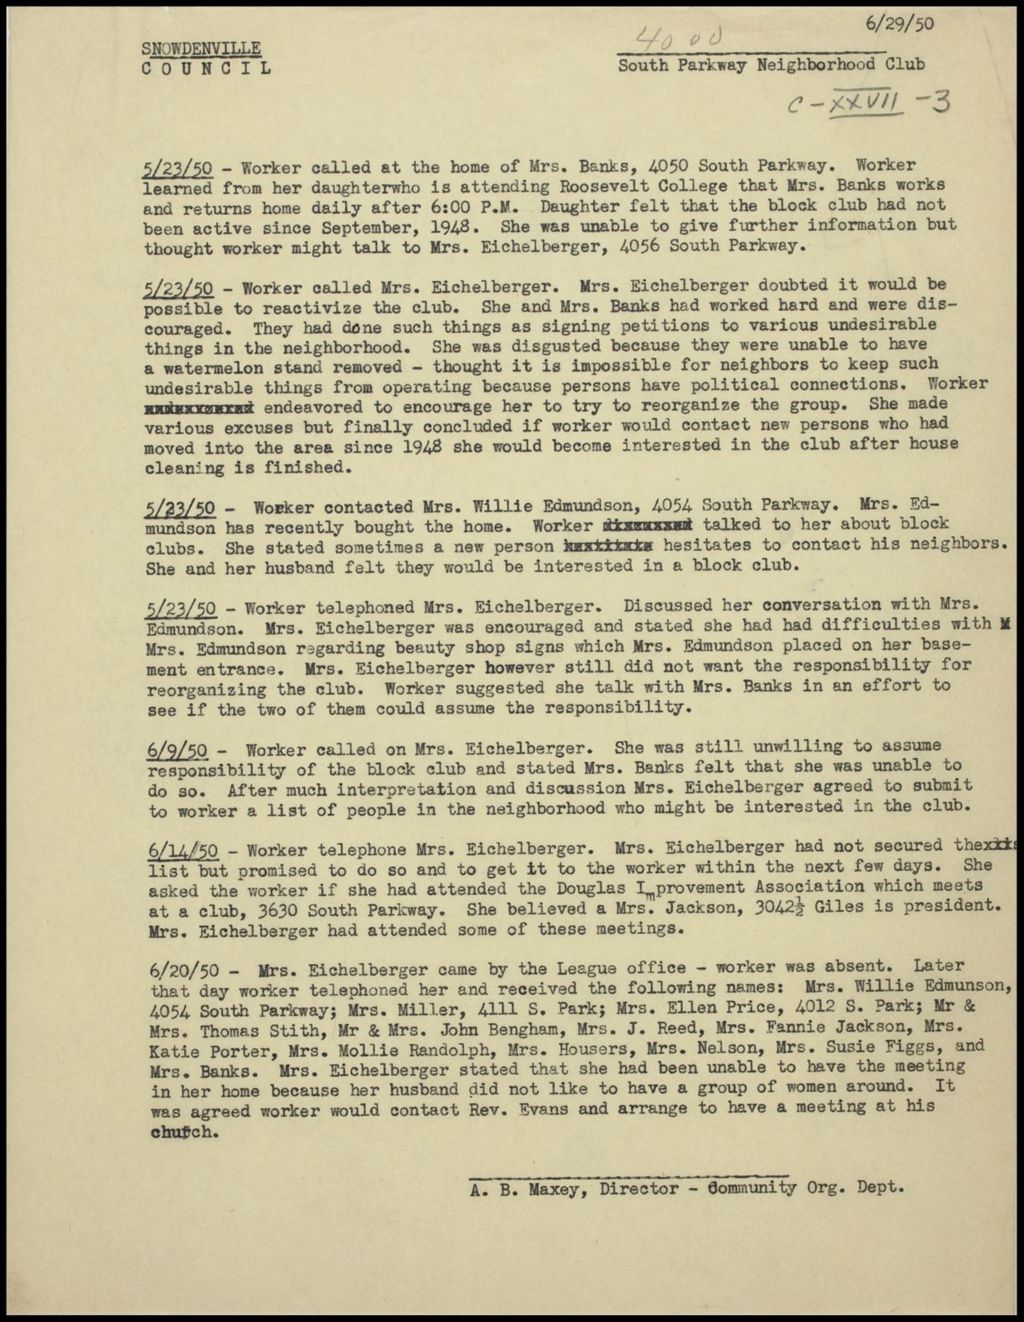 Miniature of Block Club Reports - Snowdenville Council, 1950-1954 (Folder II-2302)